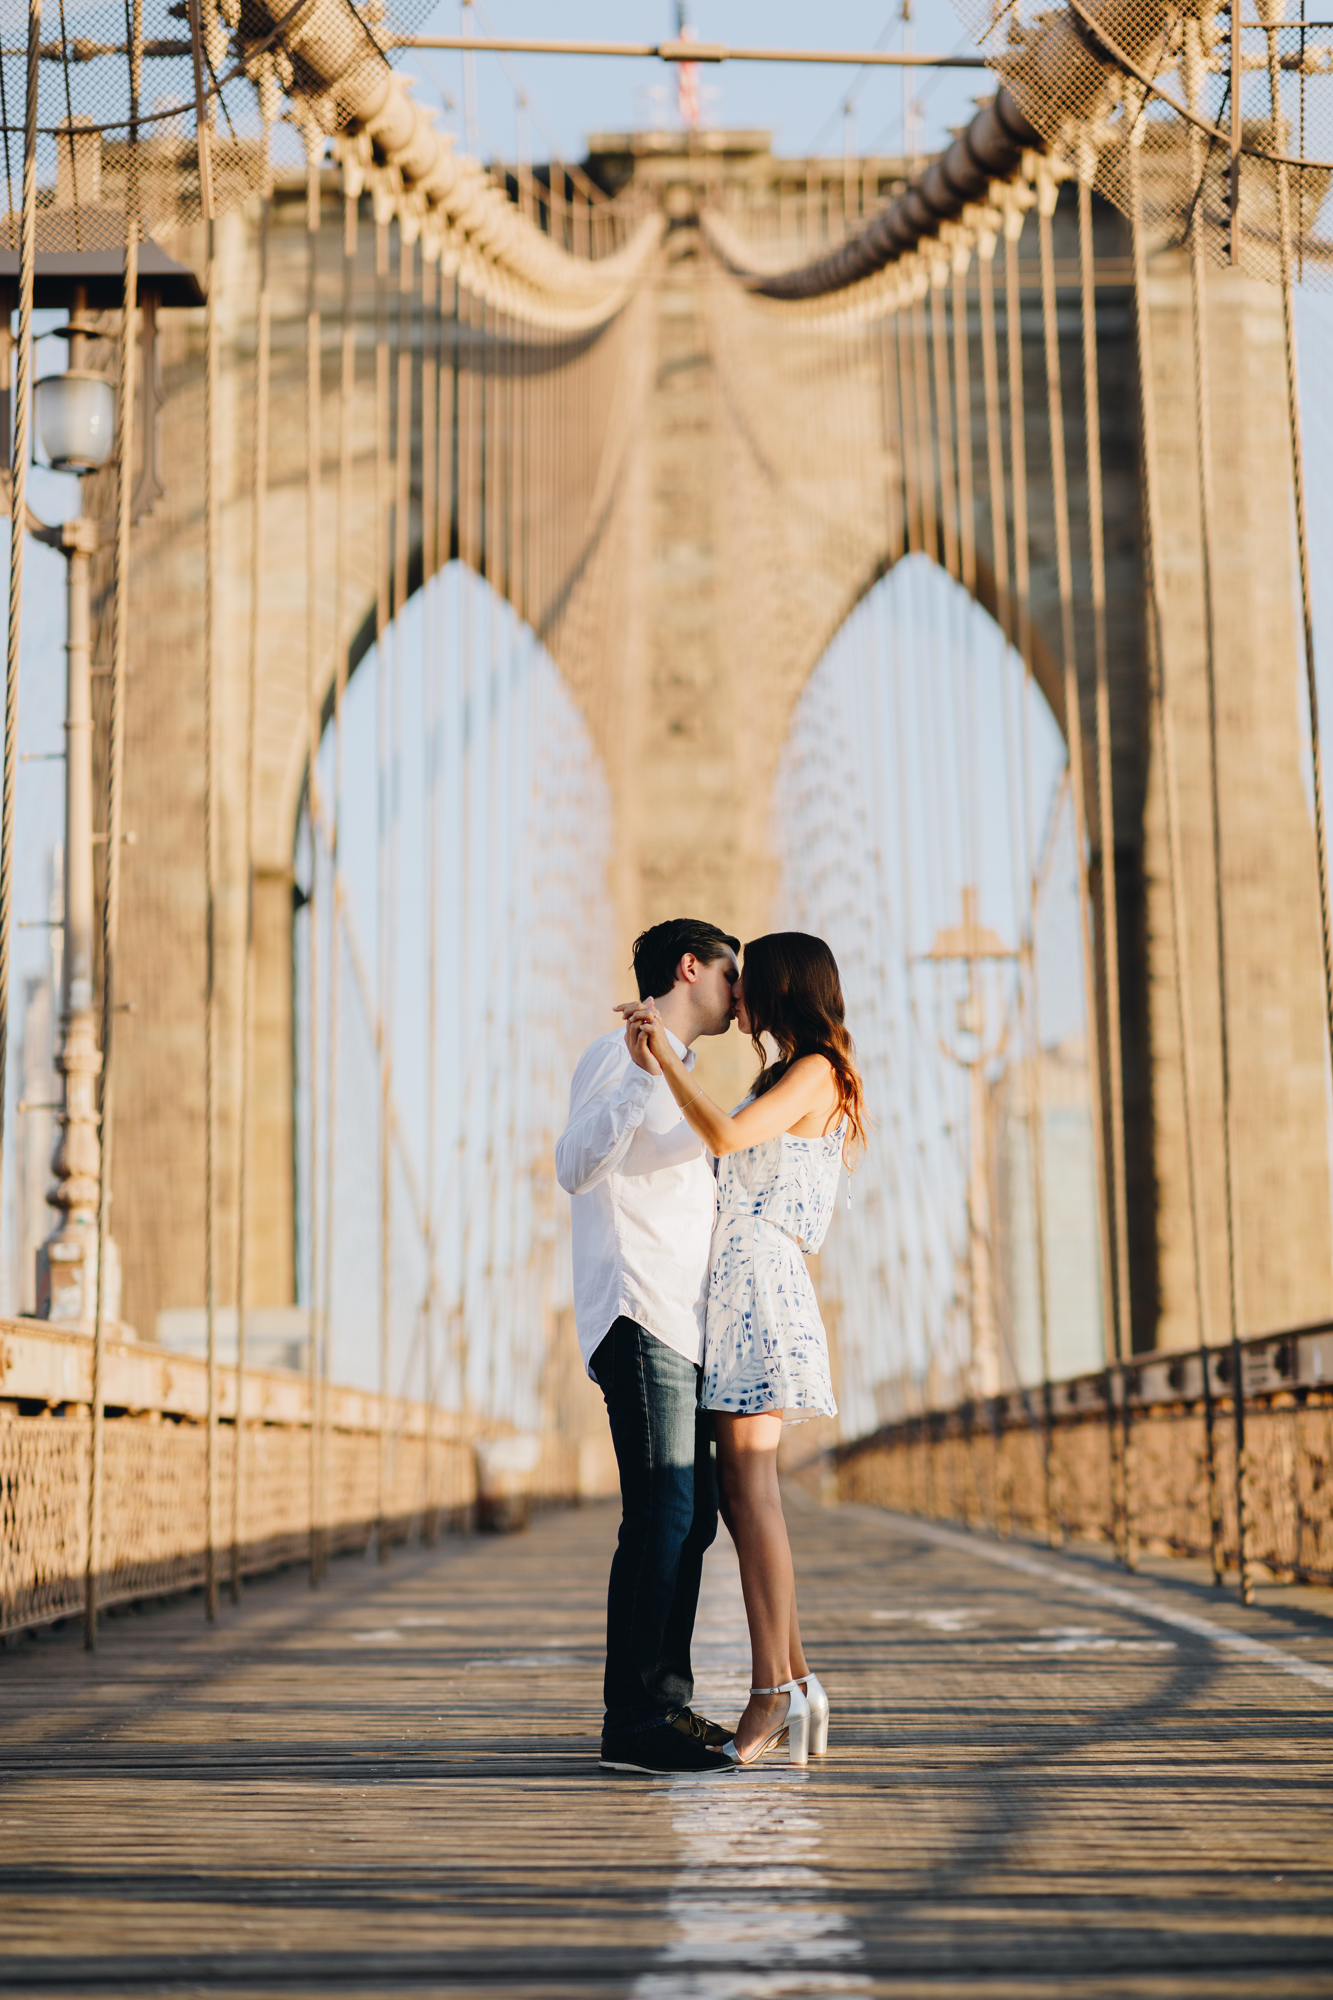 Magical Brooklyn Bridge Engagement Photos